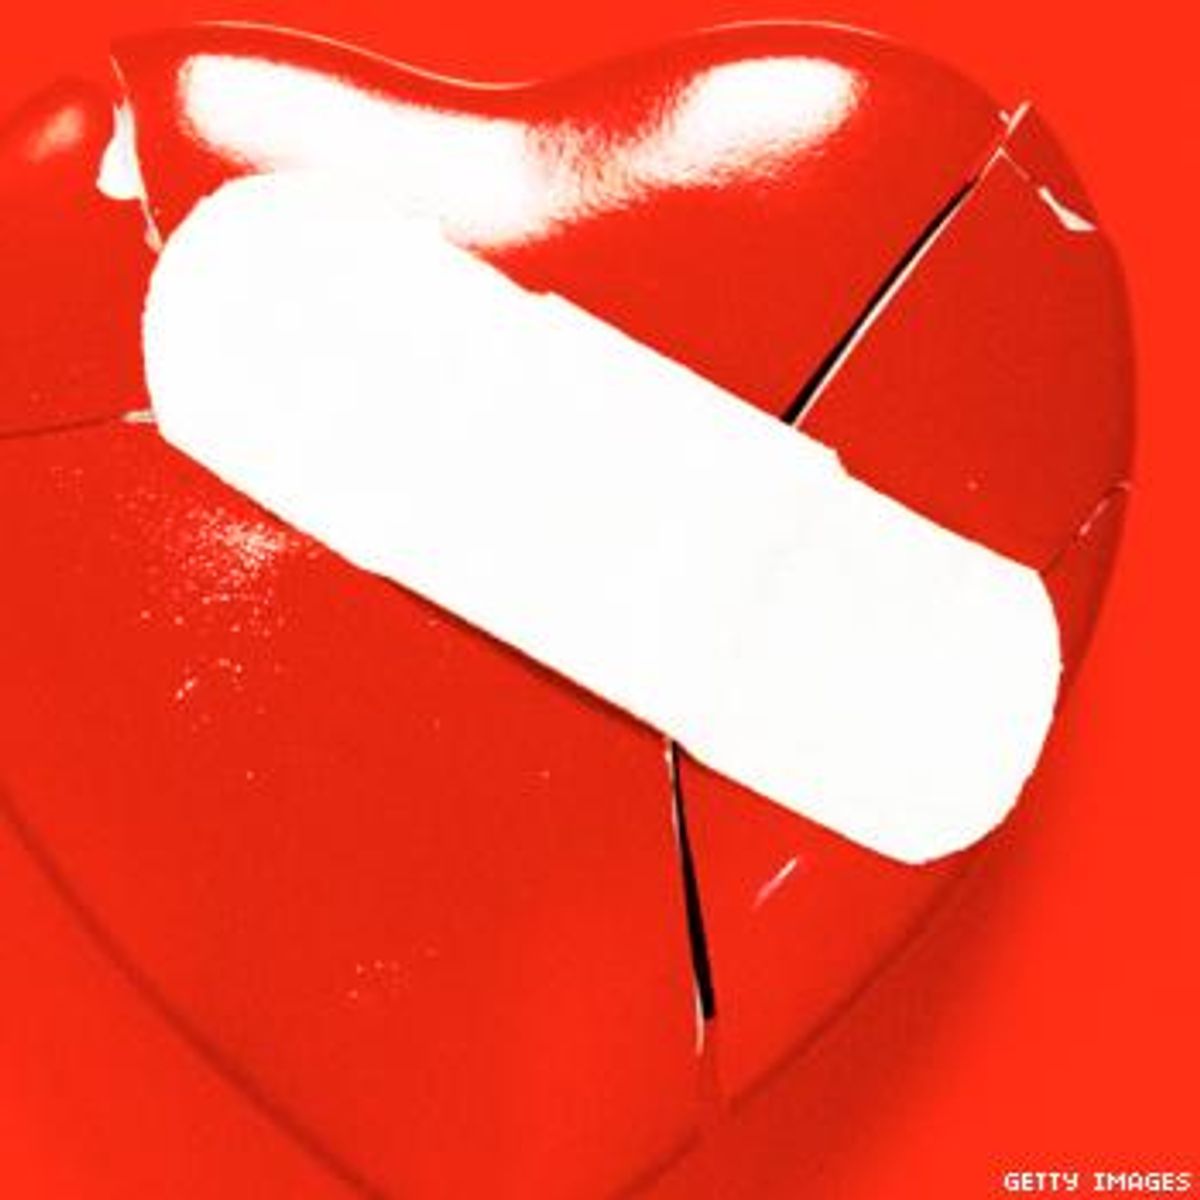 Heart_bandage_0